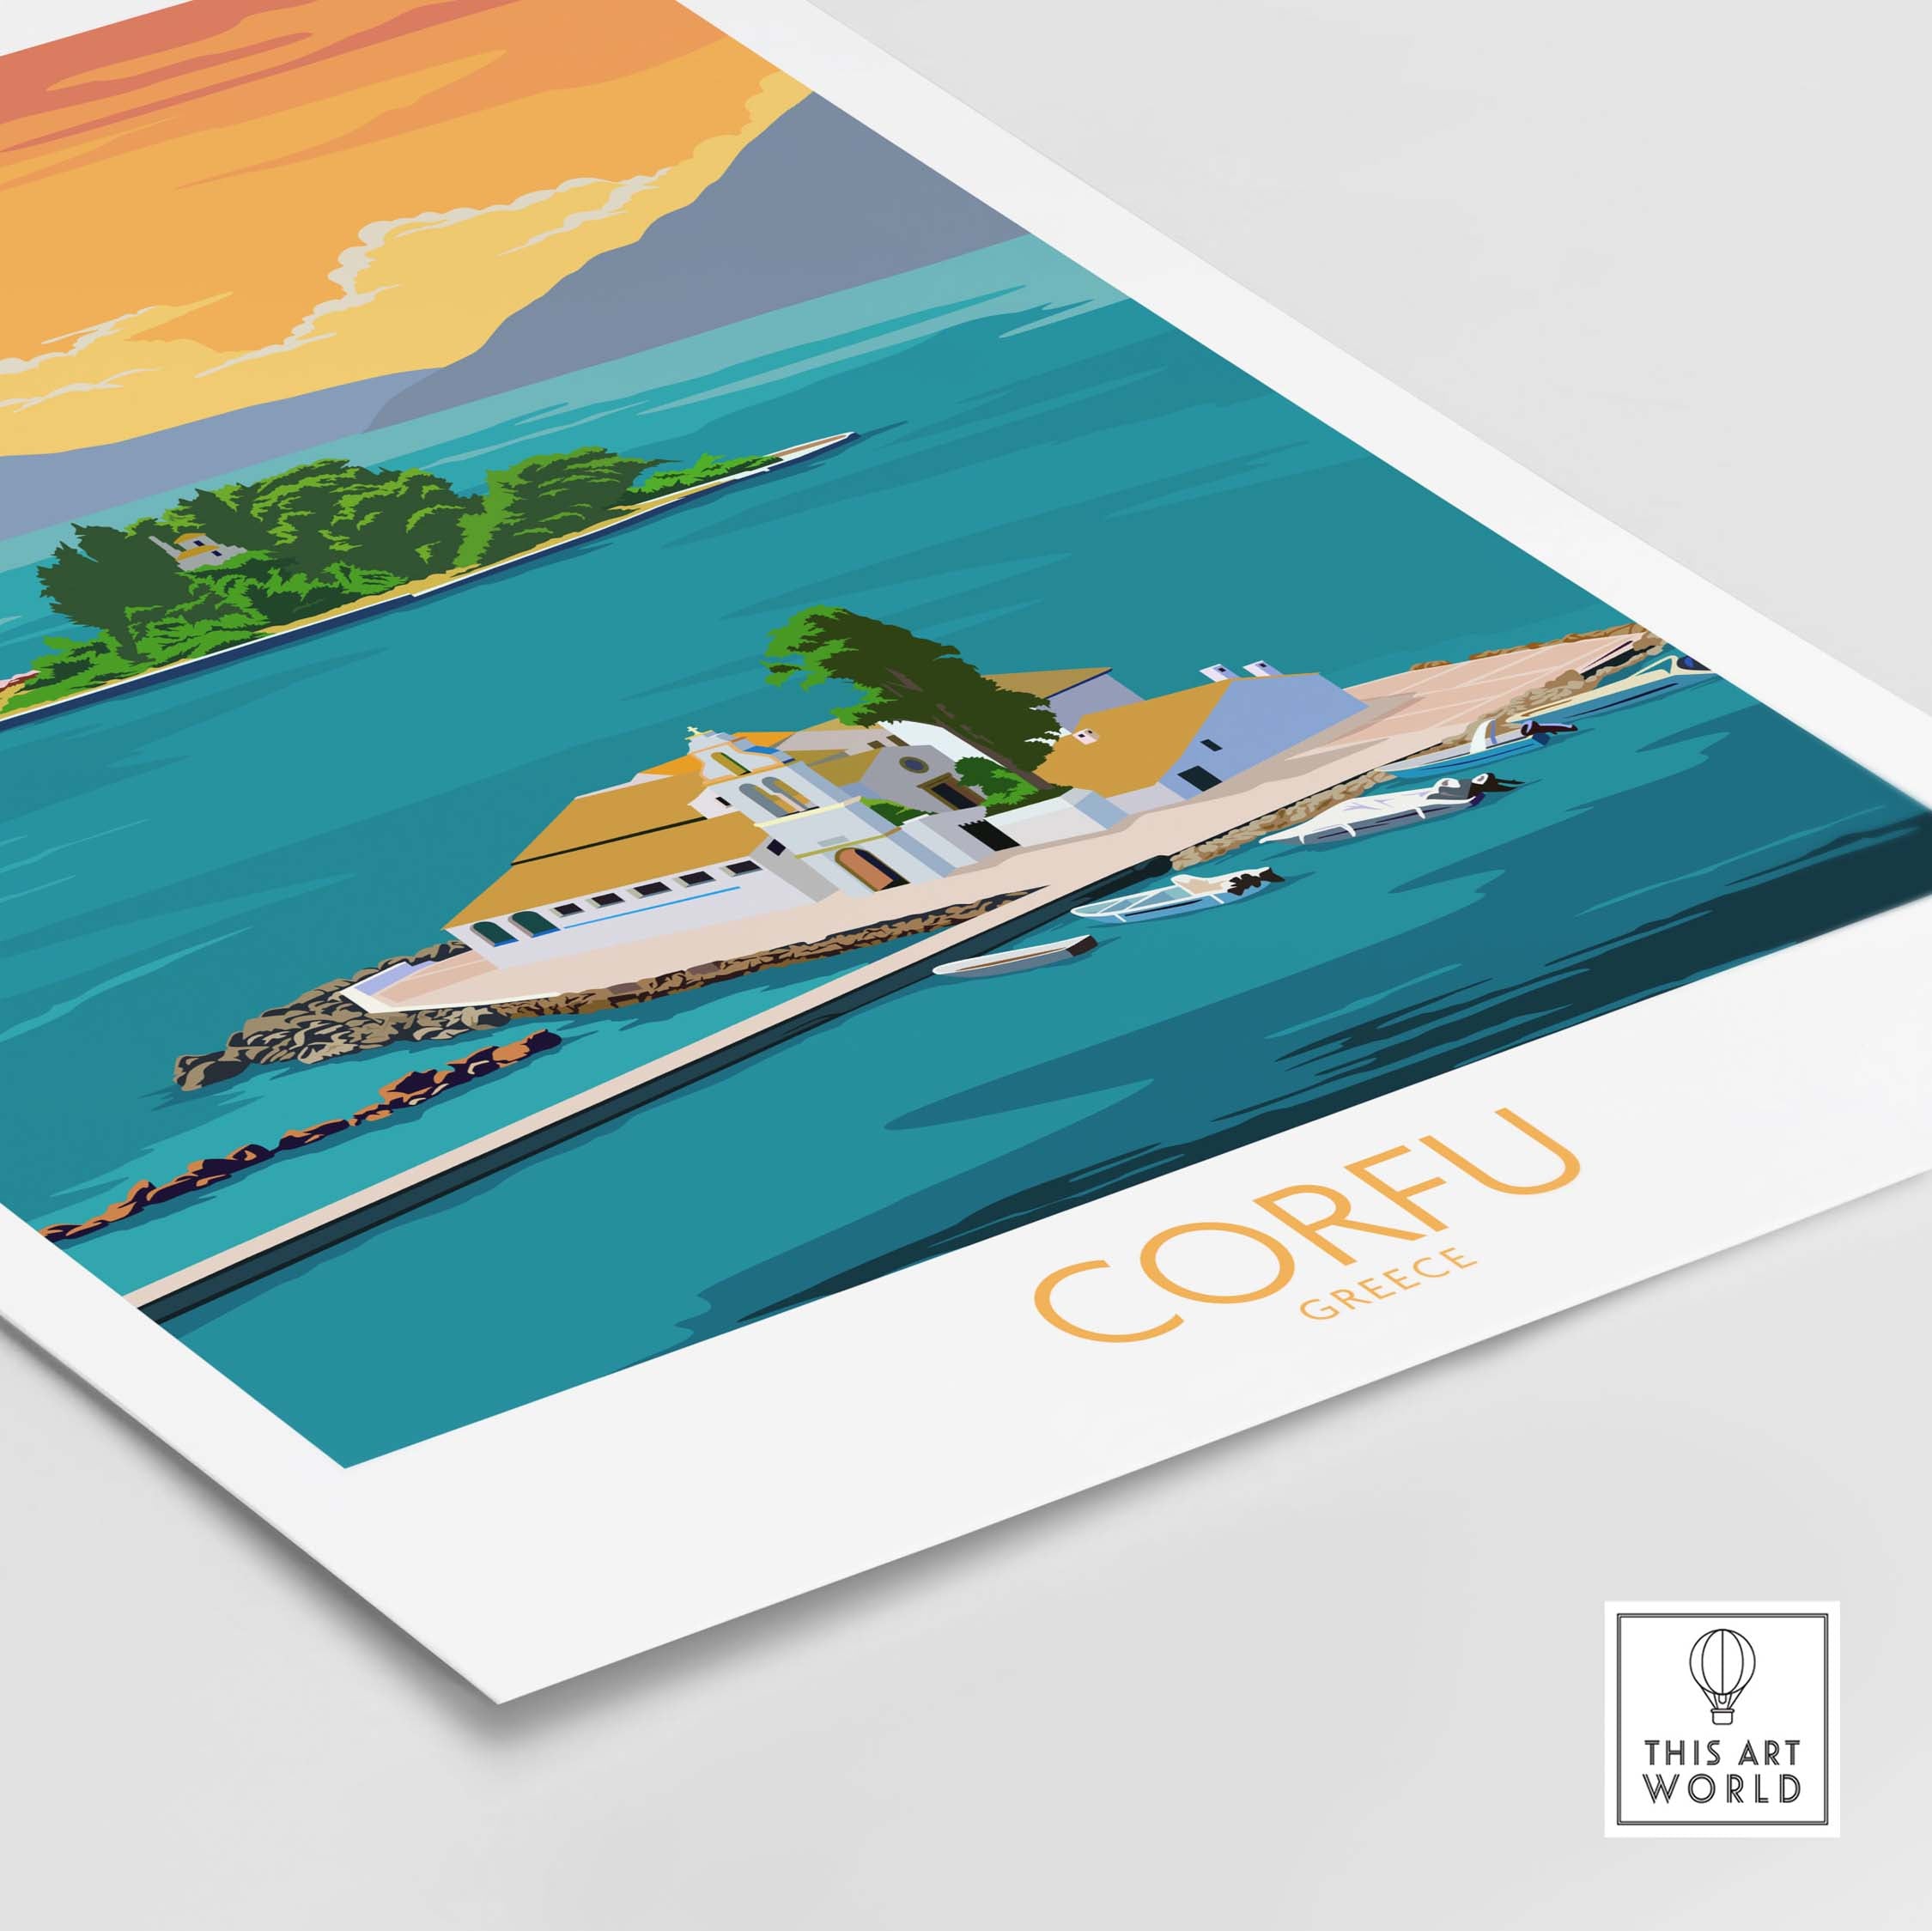 corfu art print | greek travel poster